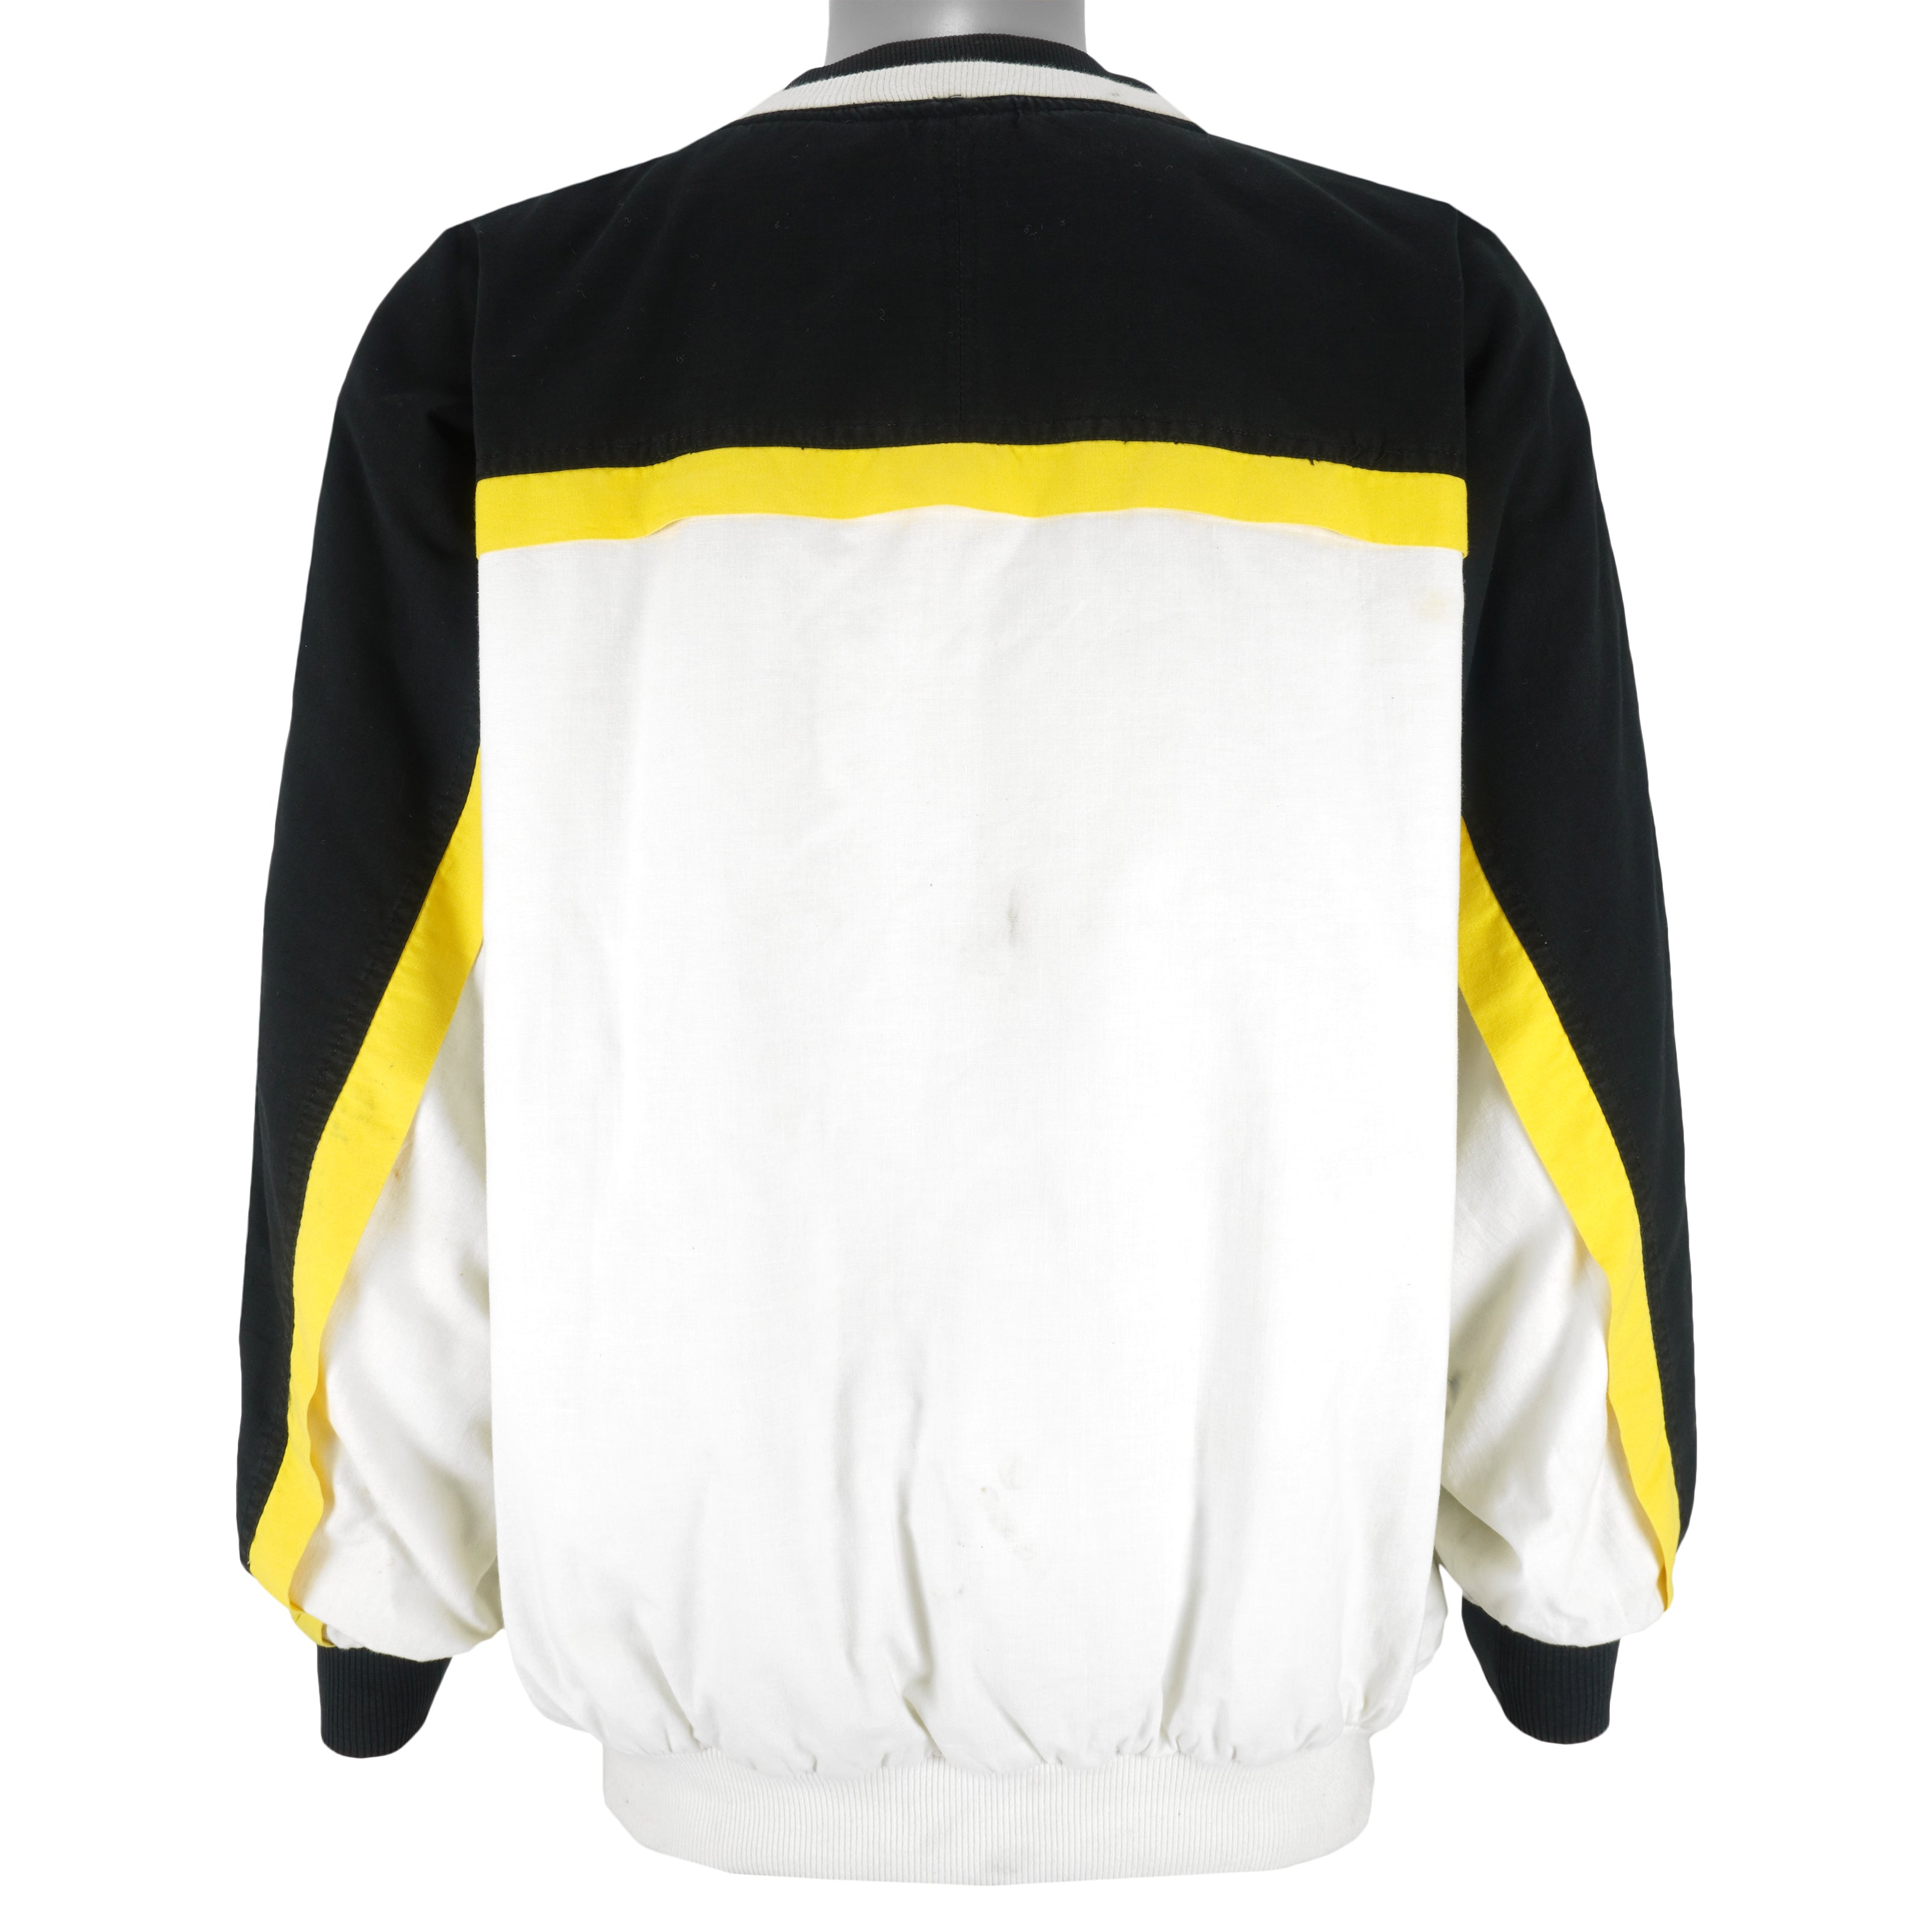 Vintage Boston Bruins Lee Sport Sweatshirt Size Large 